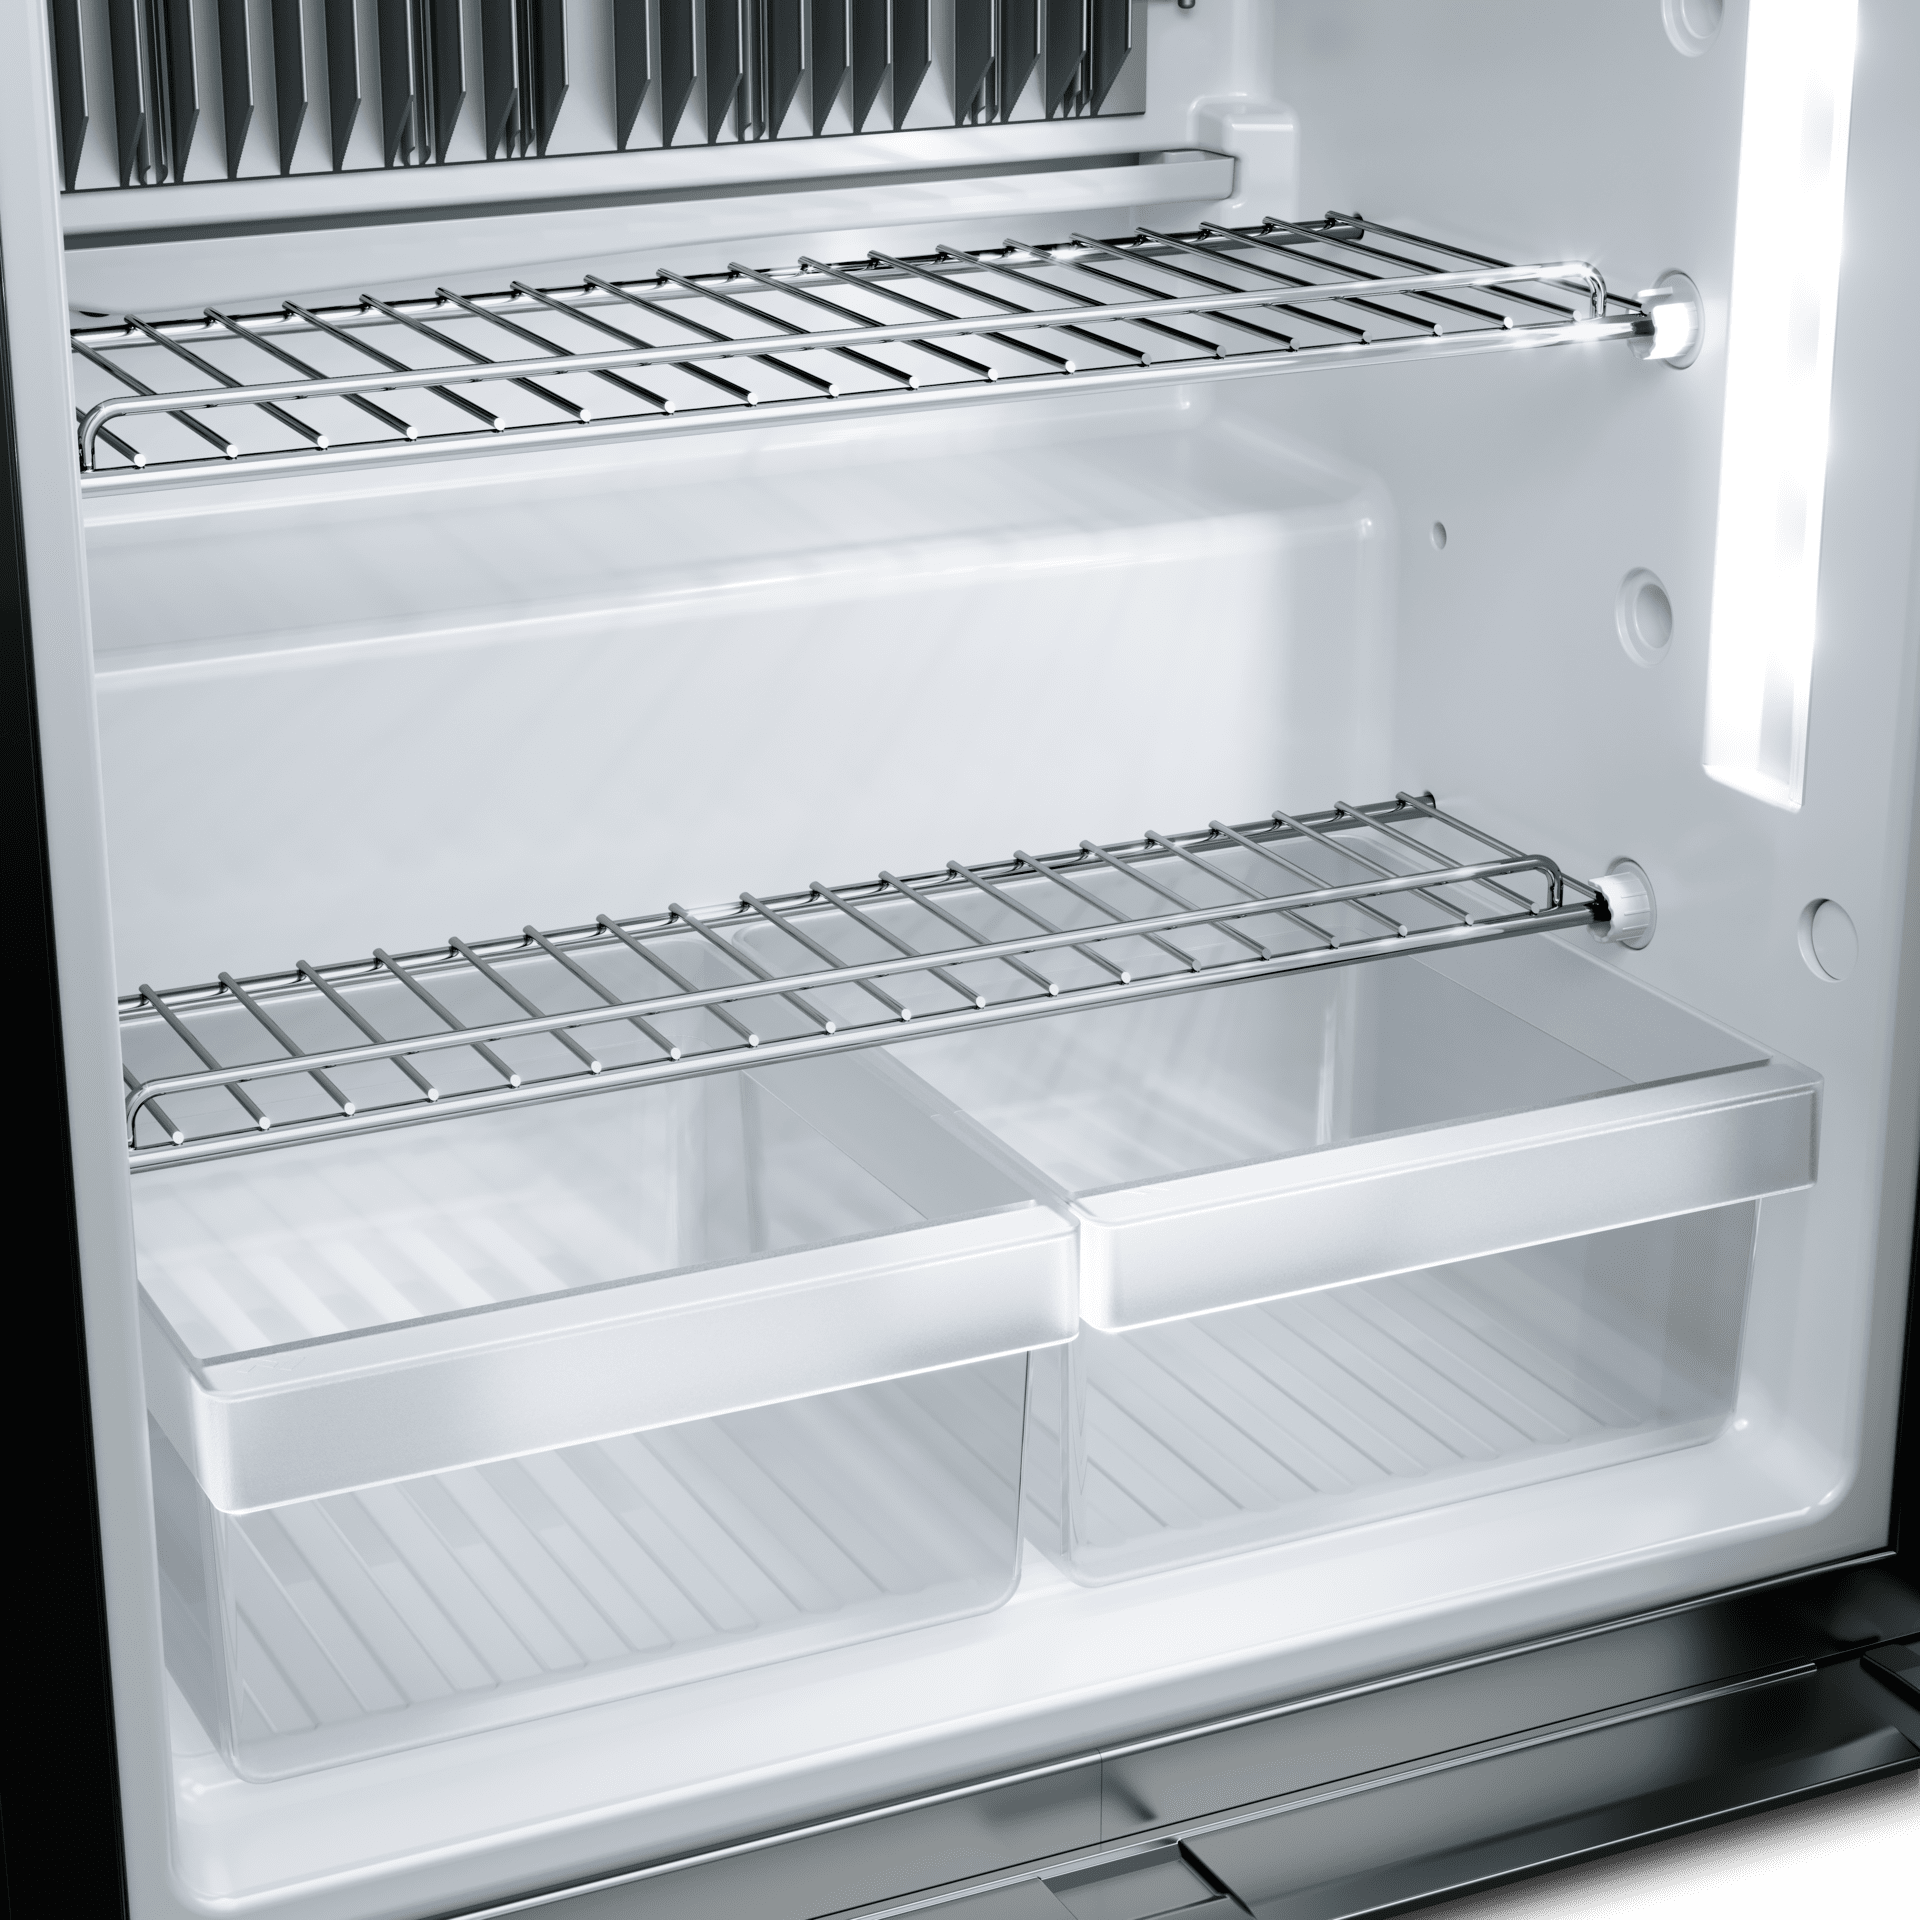 Dometic RMS 10.5XT - Absorberkühlschrank, 98 l, TFT-Display, extra tief